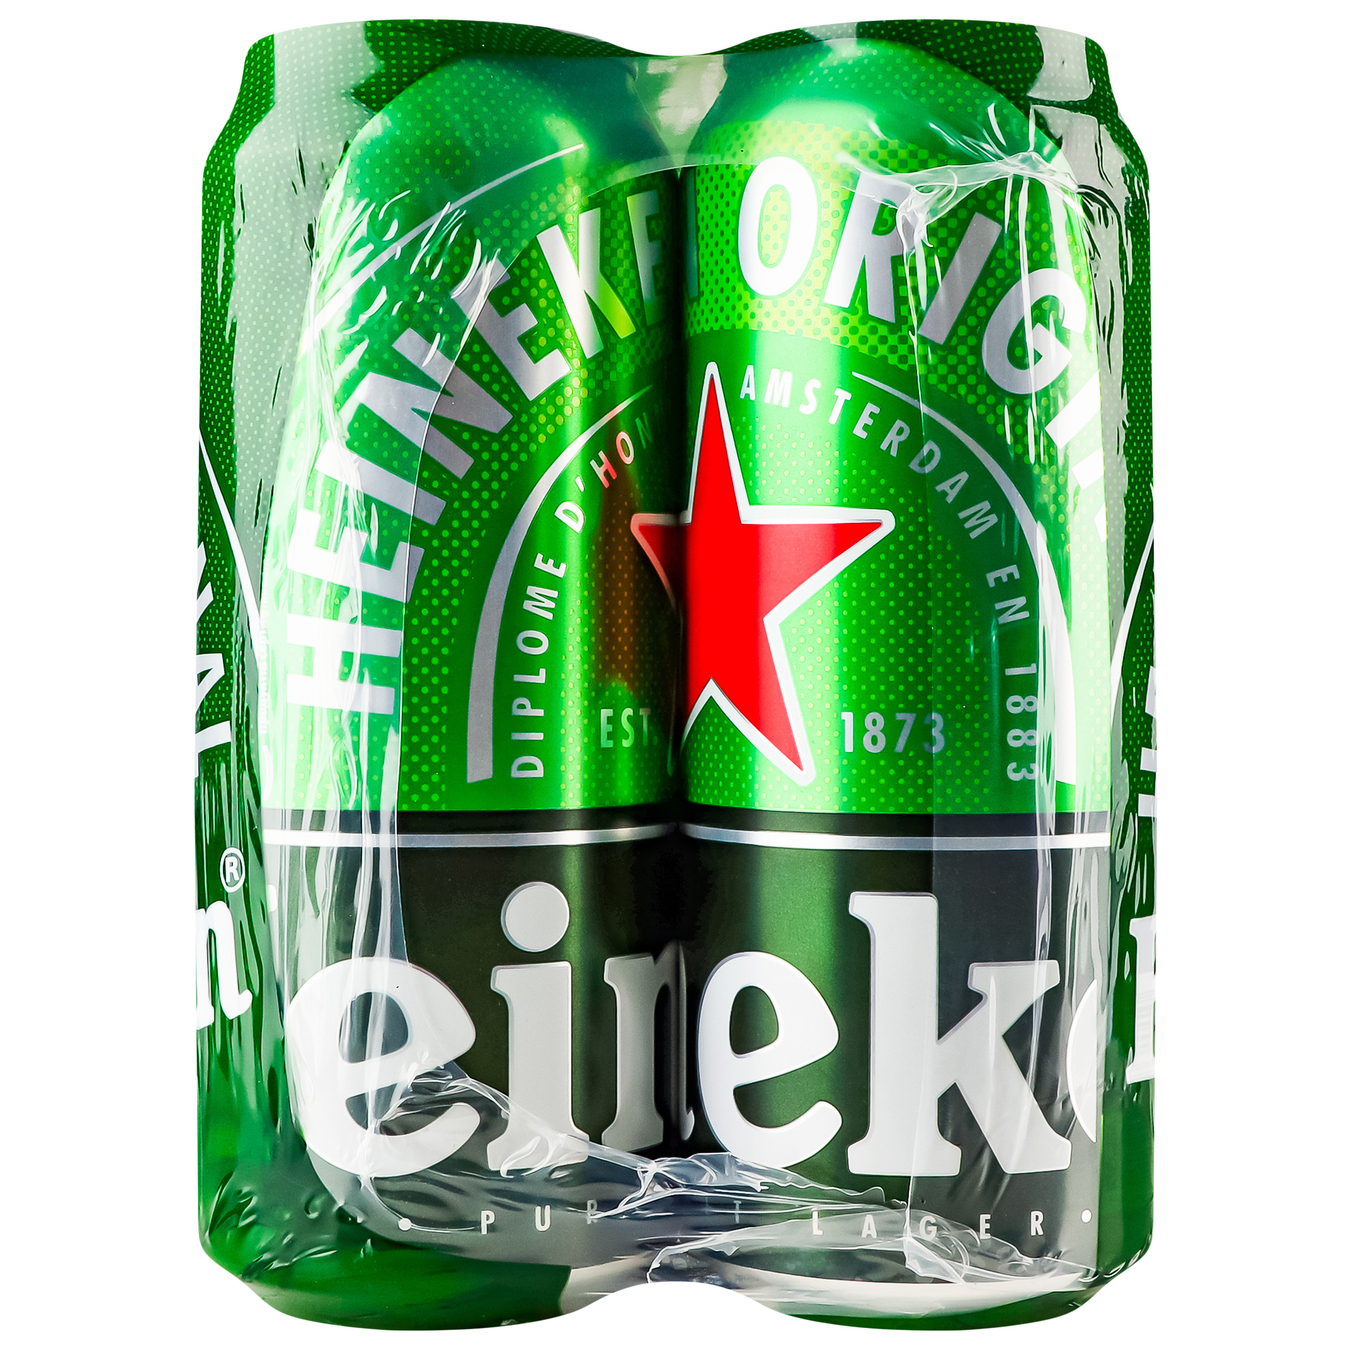 Heineken light filtered pasteurized Beer 5% 4*500ml/pack 5